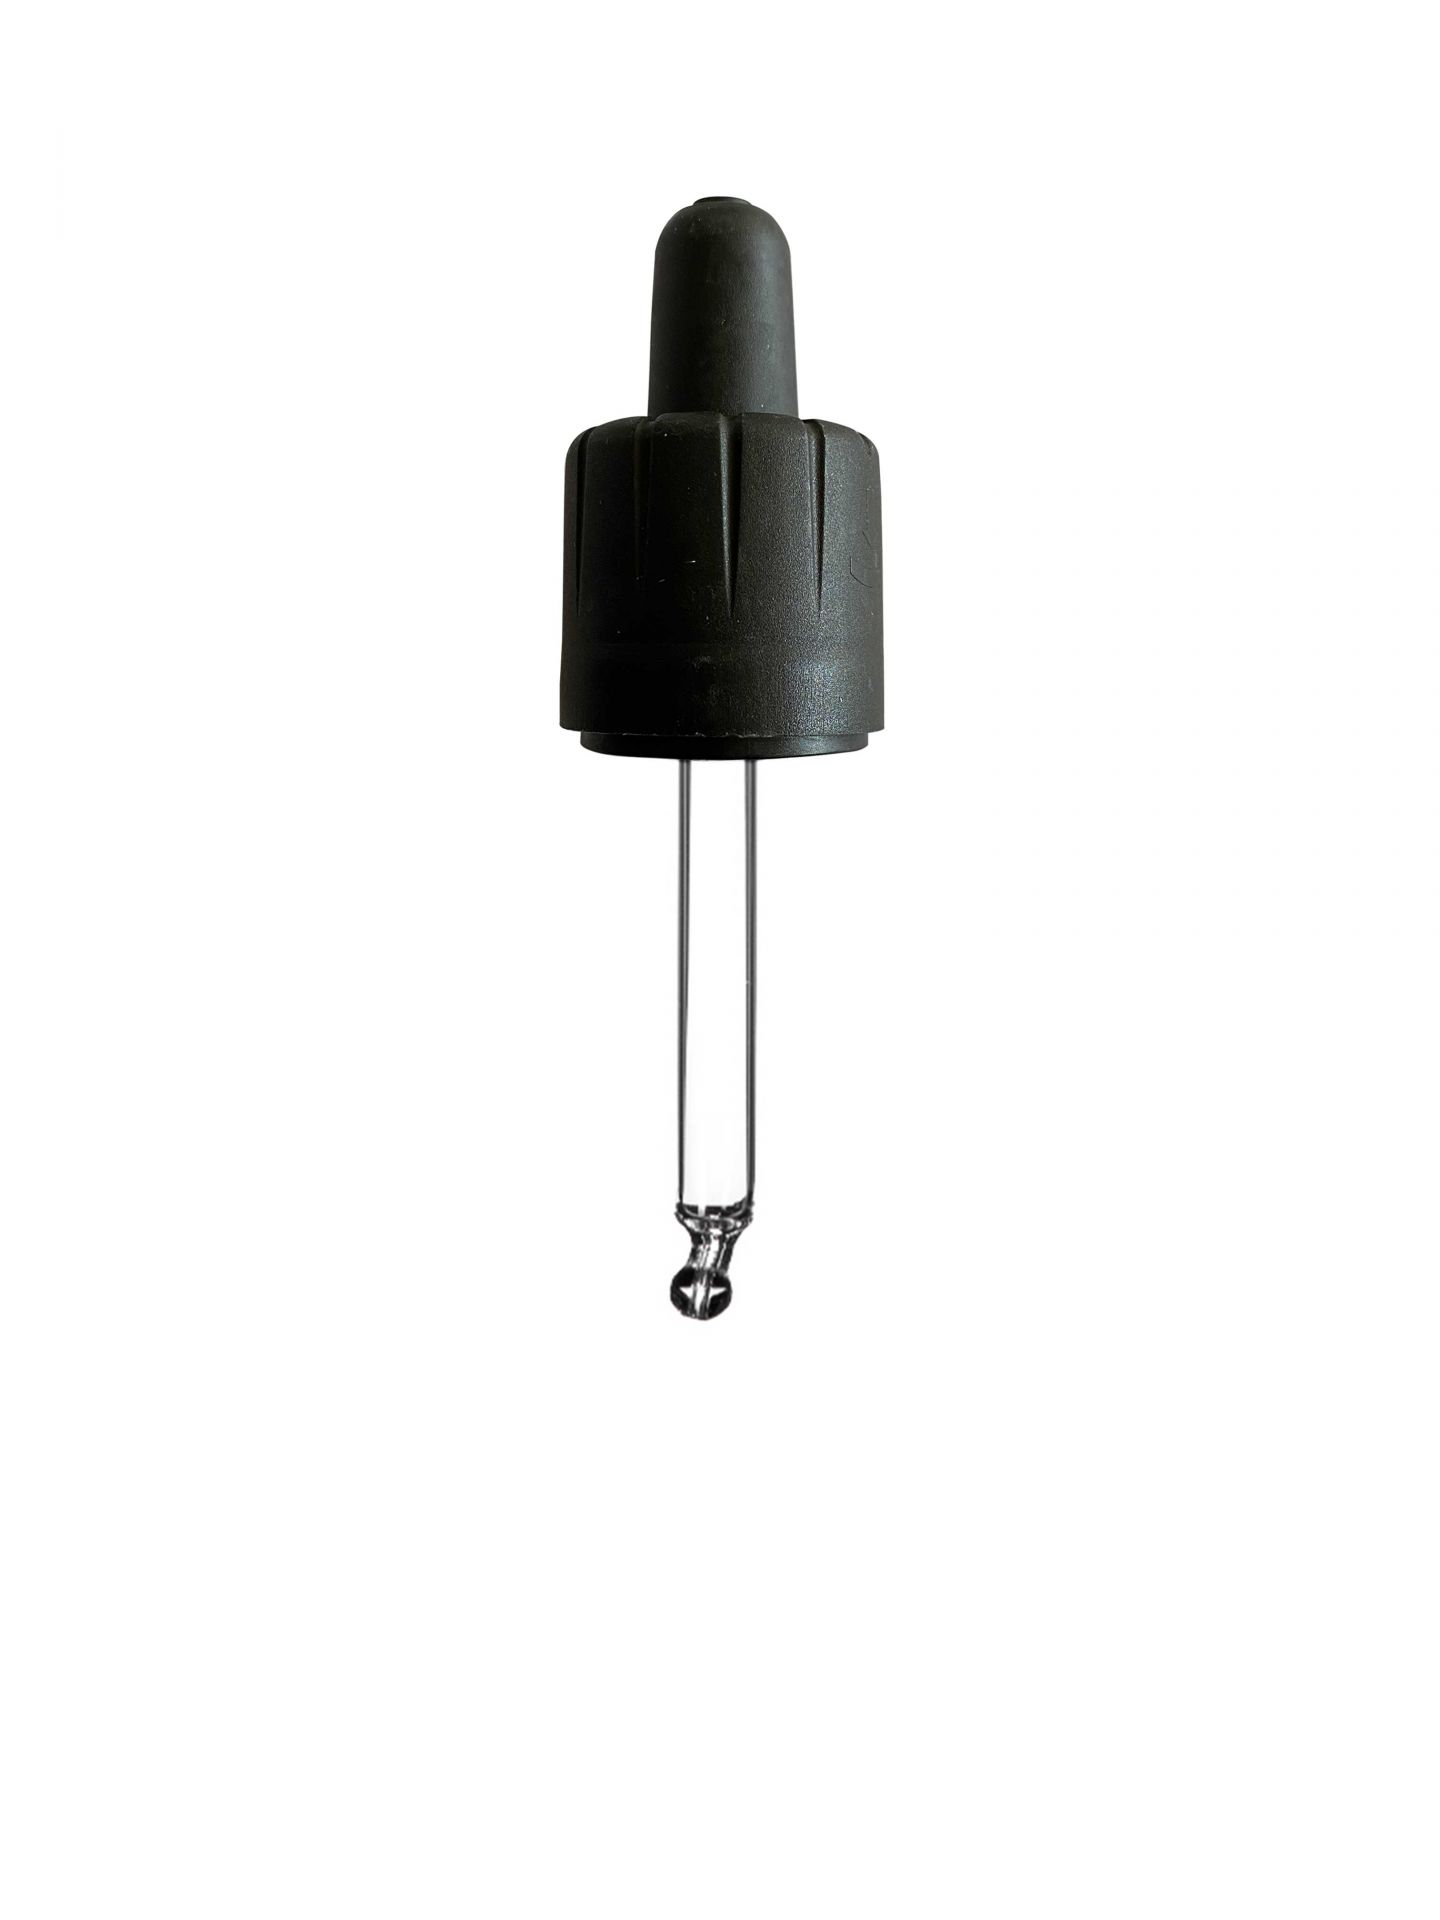 Pipette child-tamper evident DIN18, II, black, bulb TPE, dose 0.7ml, bent ball tip (Orion 15)   